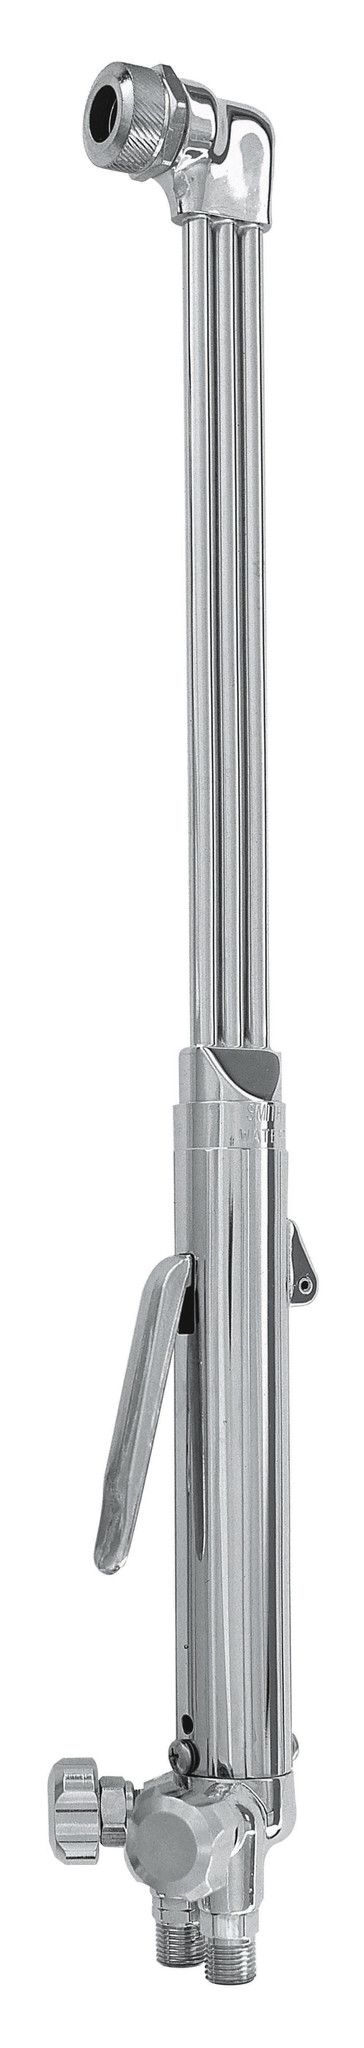 Miller-Smith SC229 Heavy Duty Cutting Torch Vertical